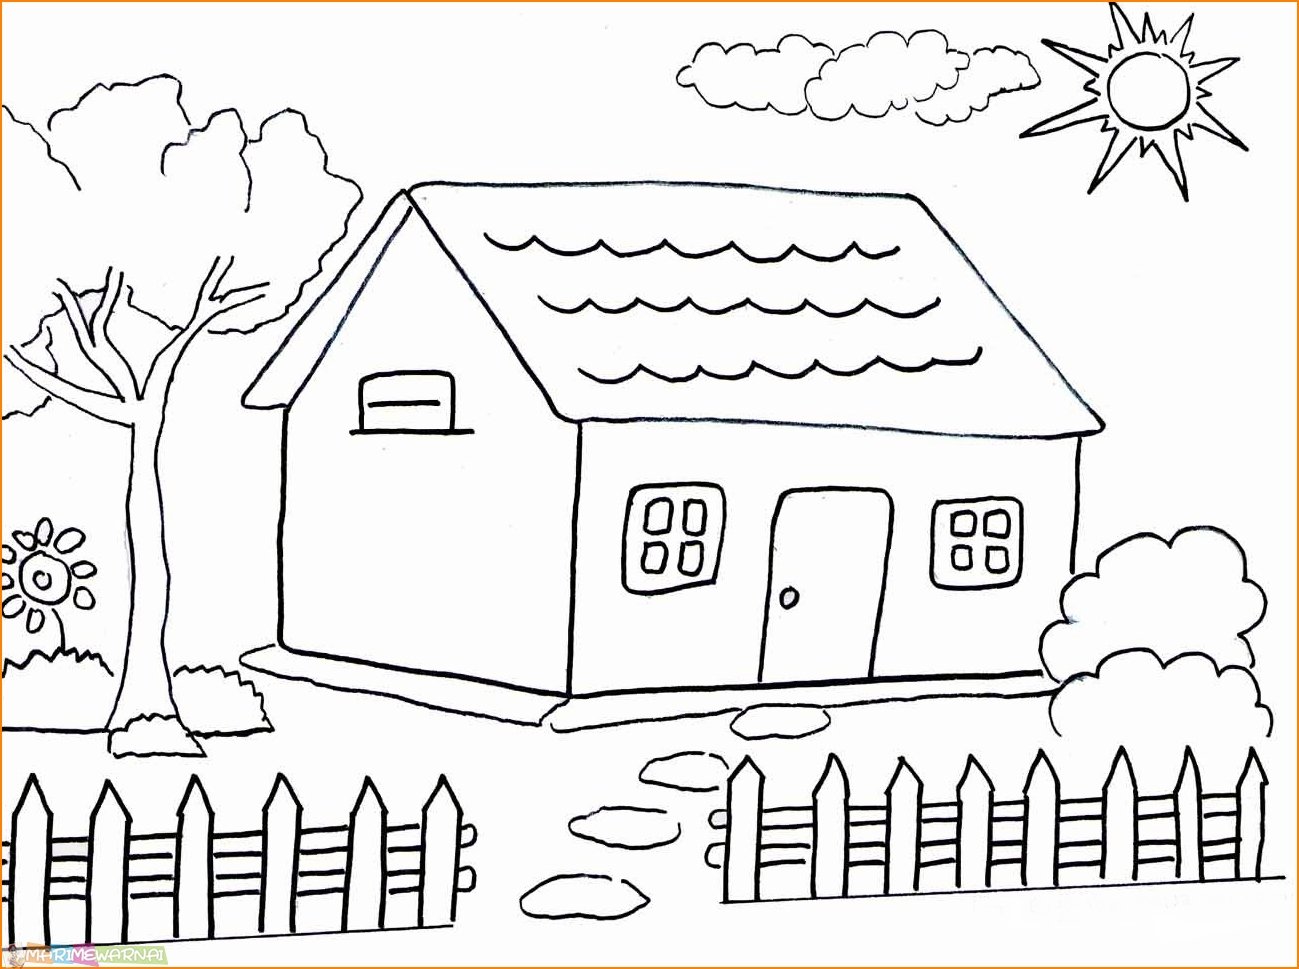 gambar sketsa rumah sederhana hd